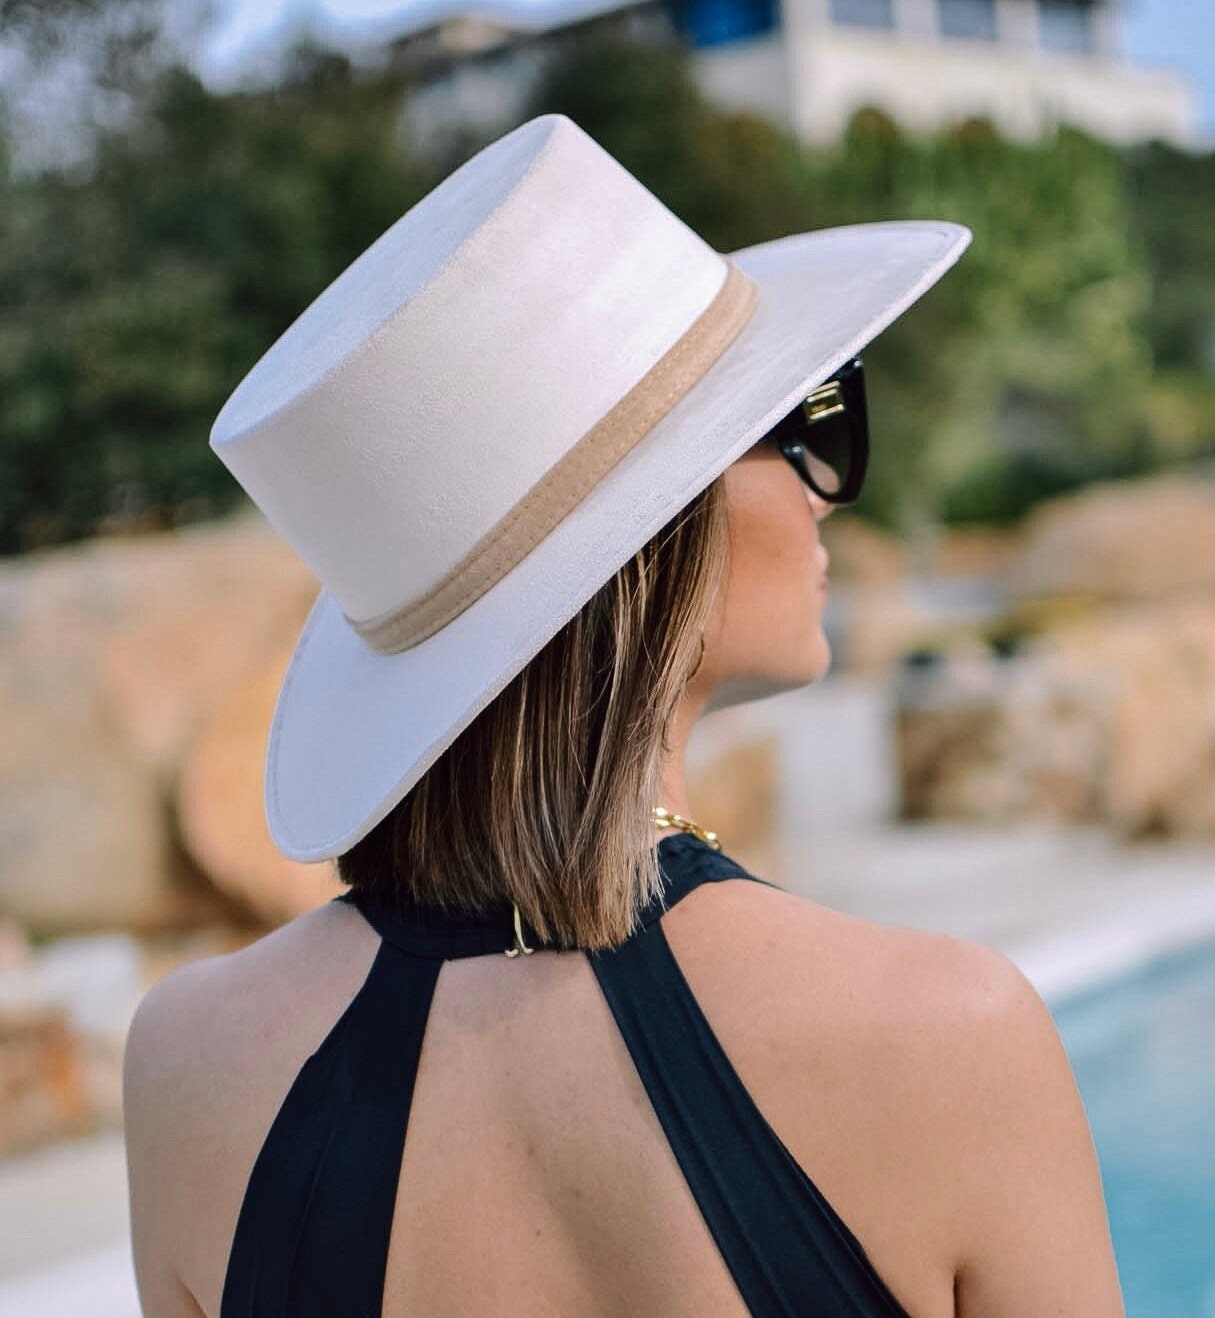 Sun Hat for Men and Women, Handmade Summer Fedora Premium Straw Hat with Snap Brim, Beach Hat, Vacation Hat